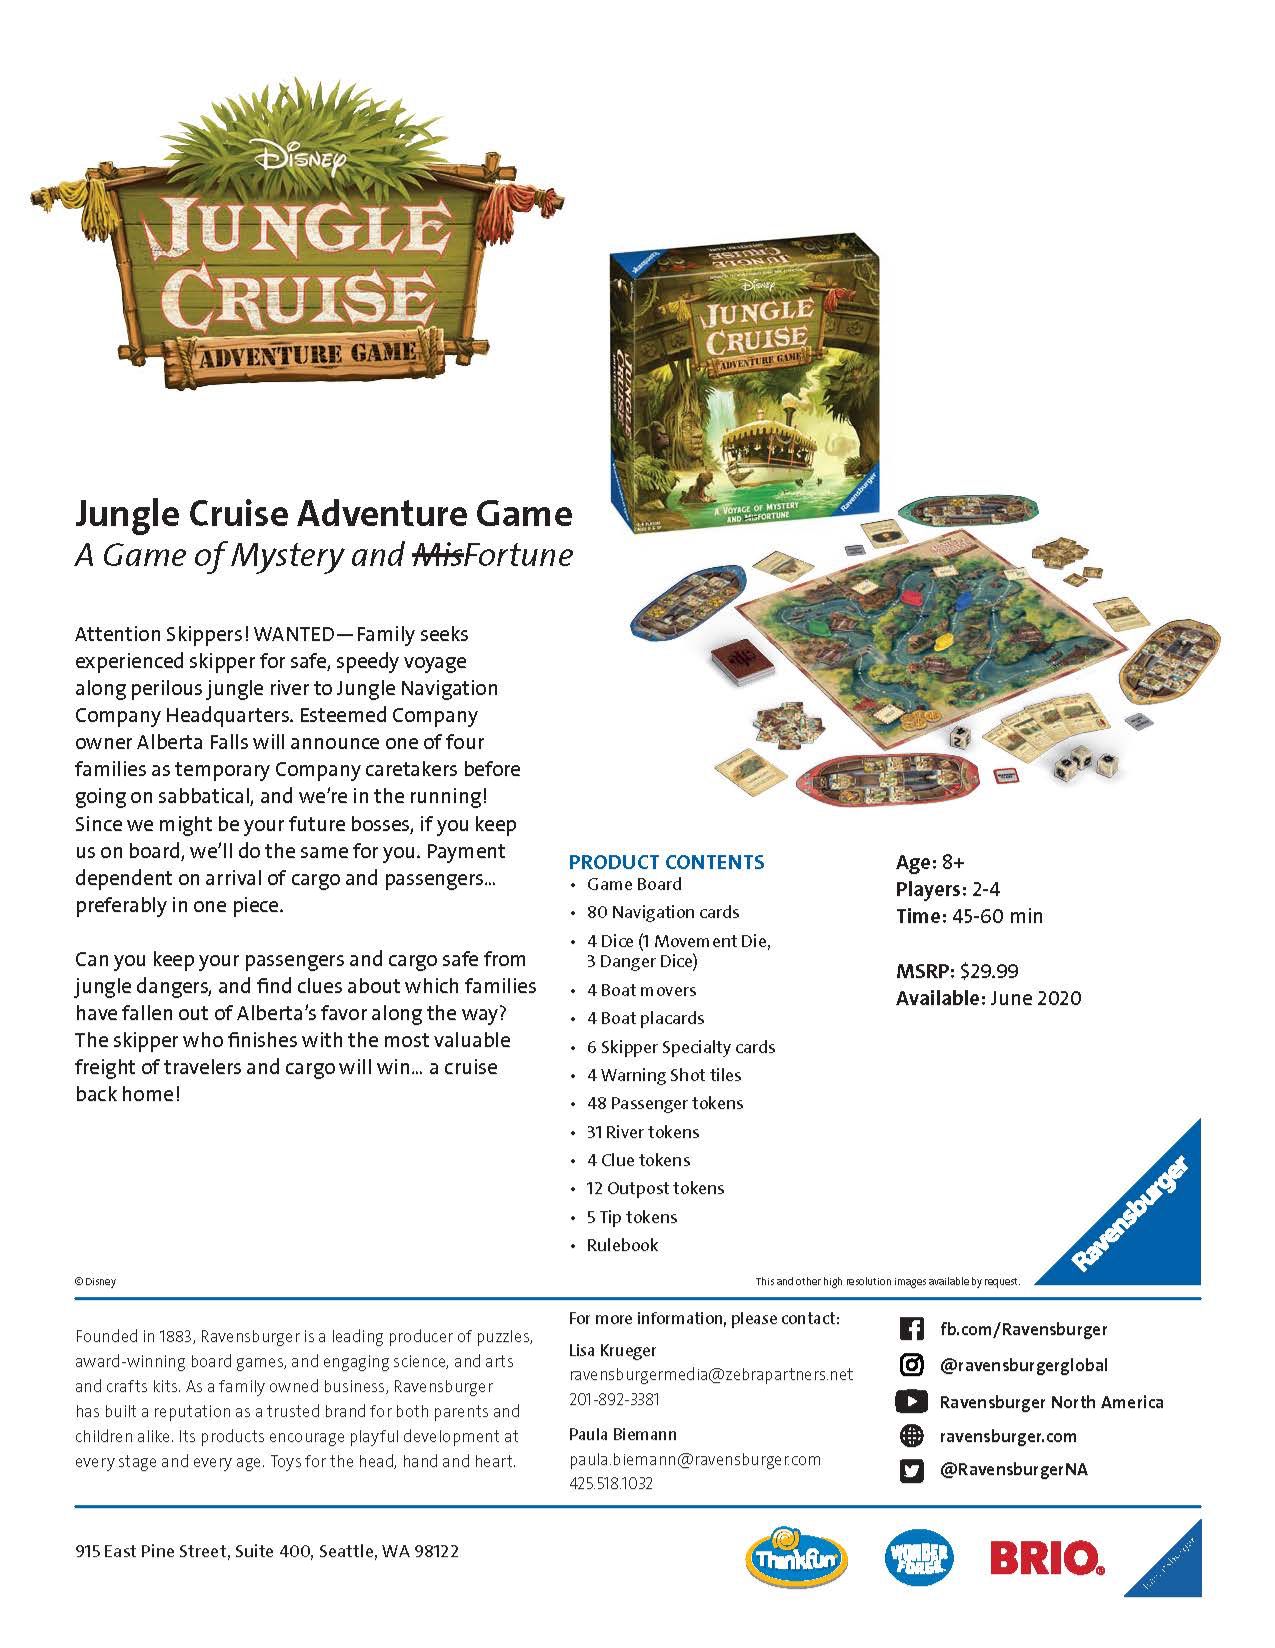 Disney Jungle Cruise Adventure Game image #5